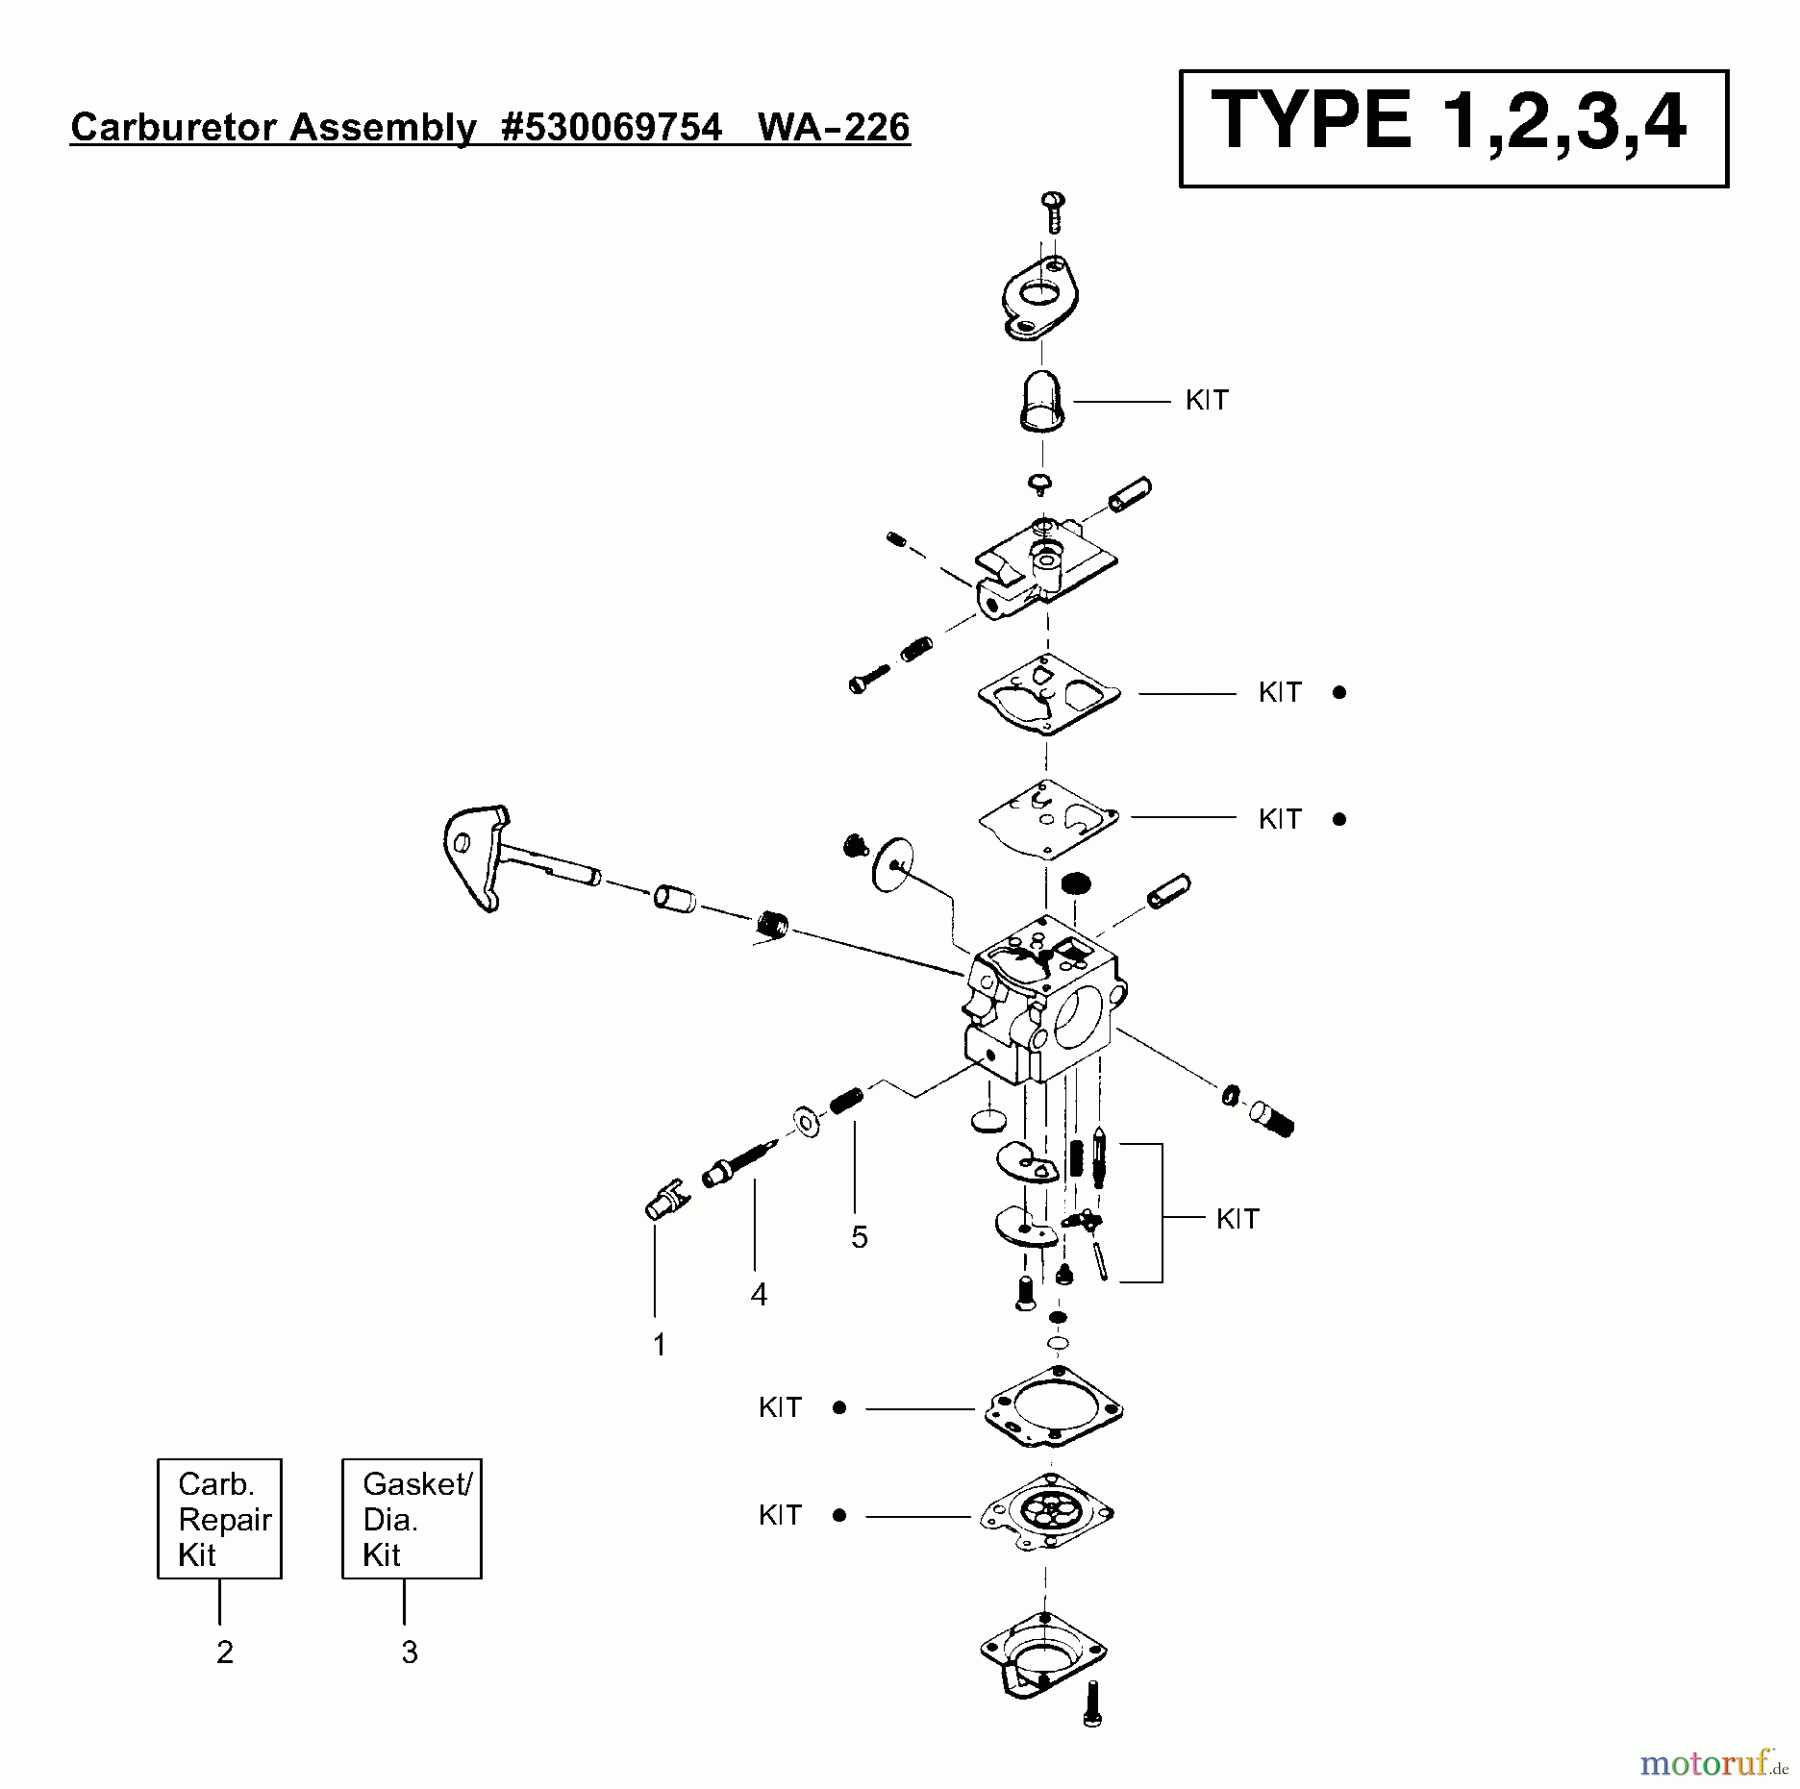  Poulan / Weed Eater Motorsensen, Trimmer SST25 (Type 1) - Weed Eater Featherlite HO String Trimmer Carburetor Assembly (WA226) P/N 530069754